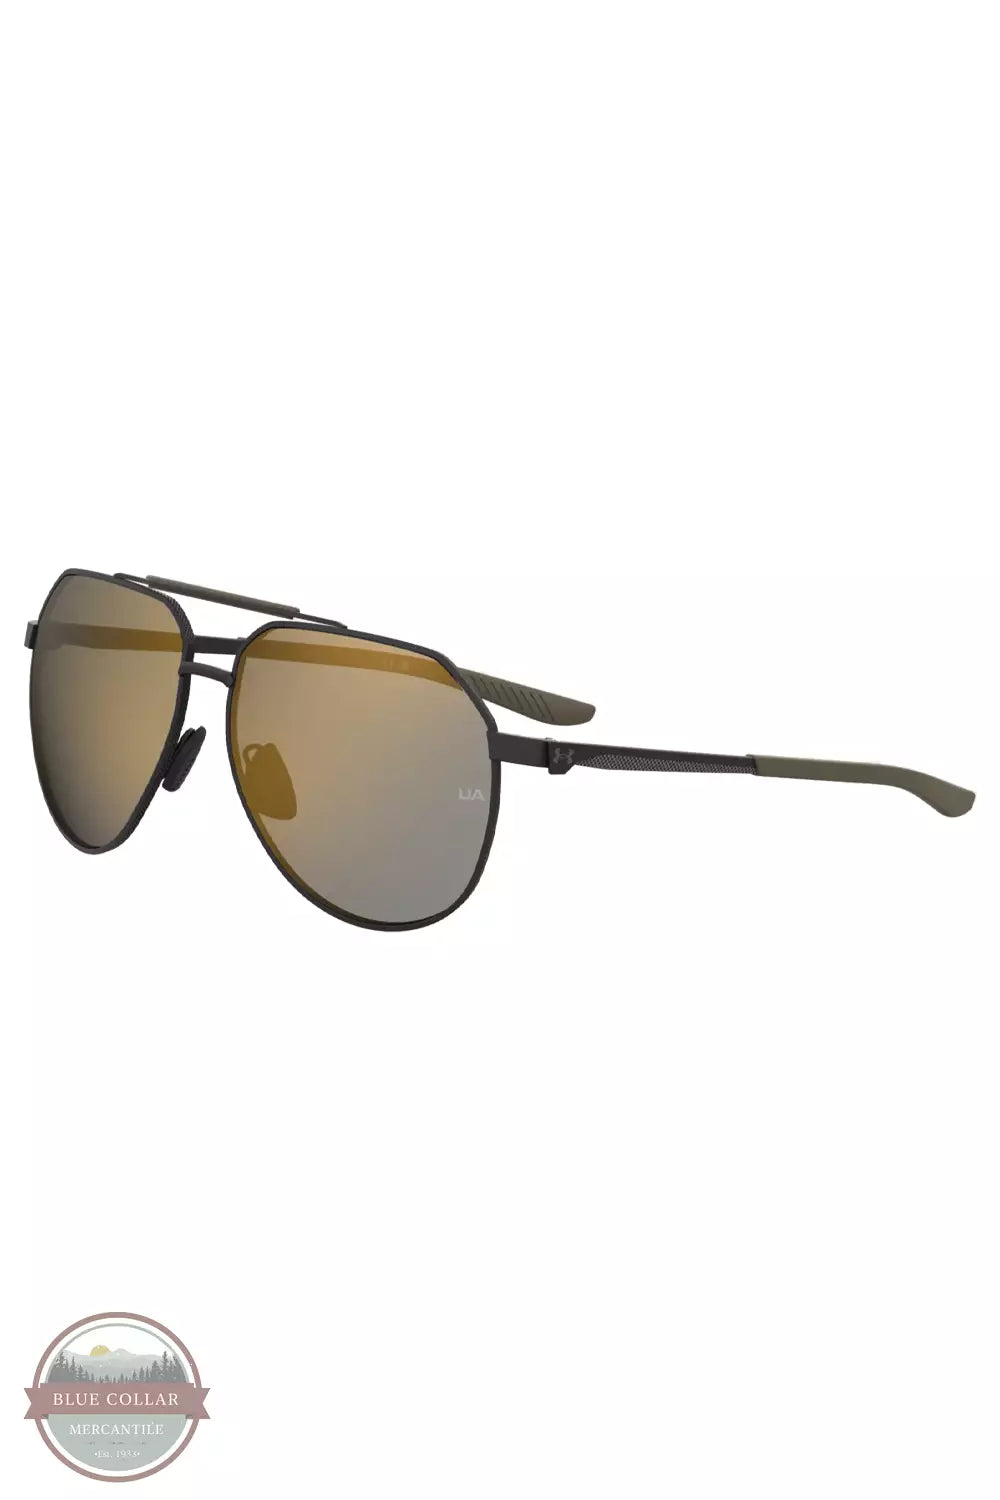 Under Armour 1385109-883 Honcho Mirror Sunglasses in Matte Black /Bronze Flash Mirror / Ruthenium Profile View